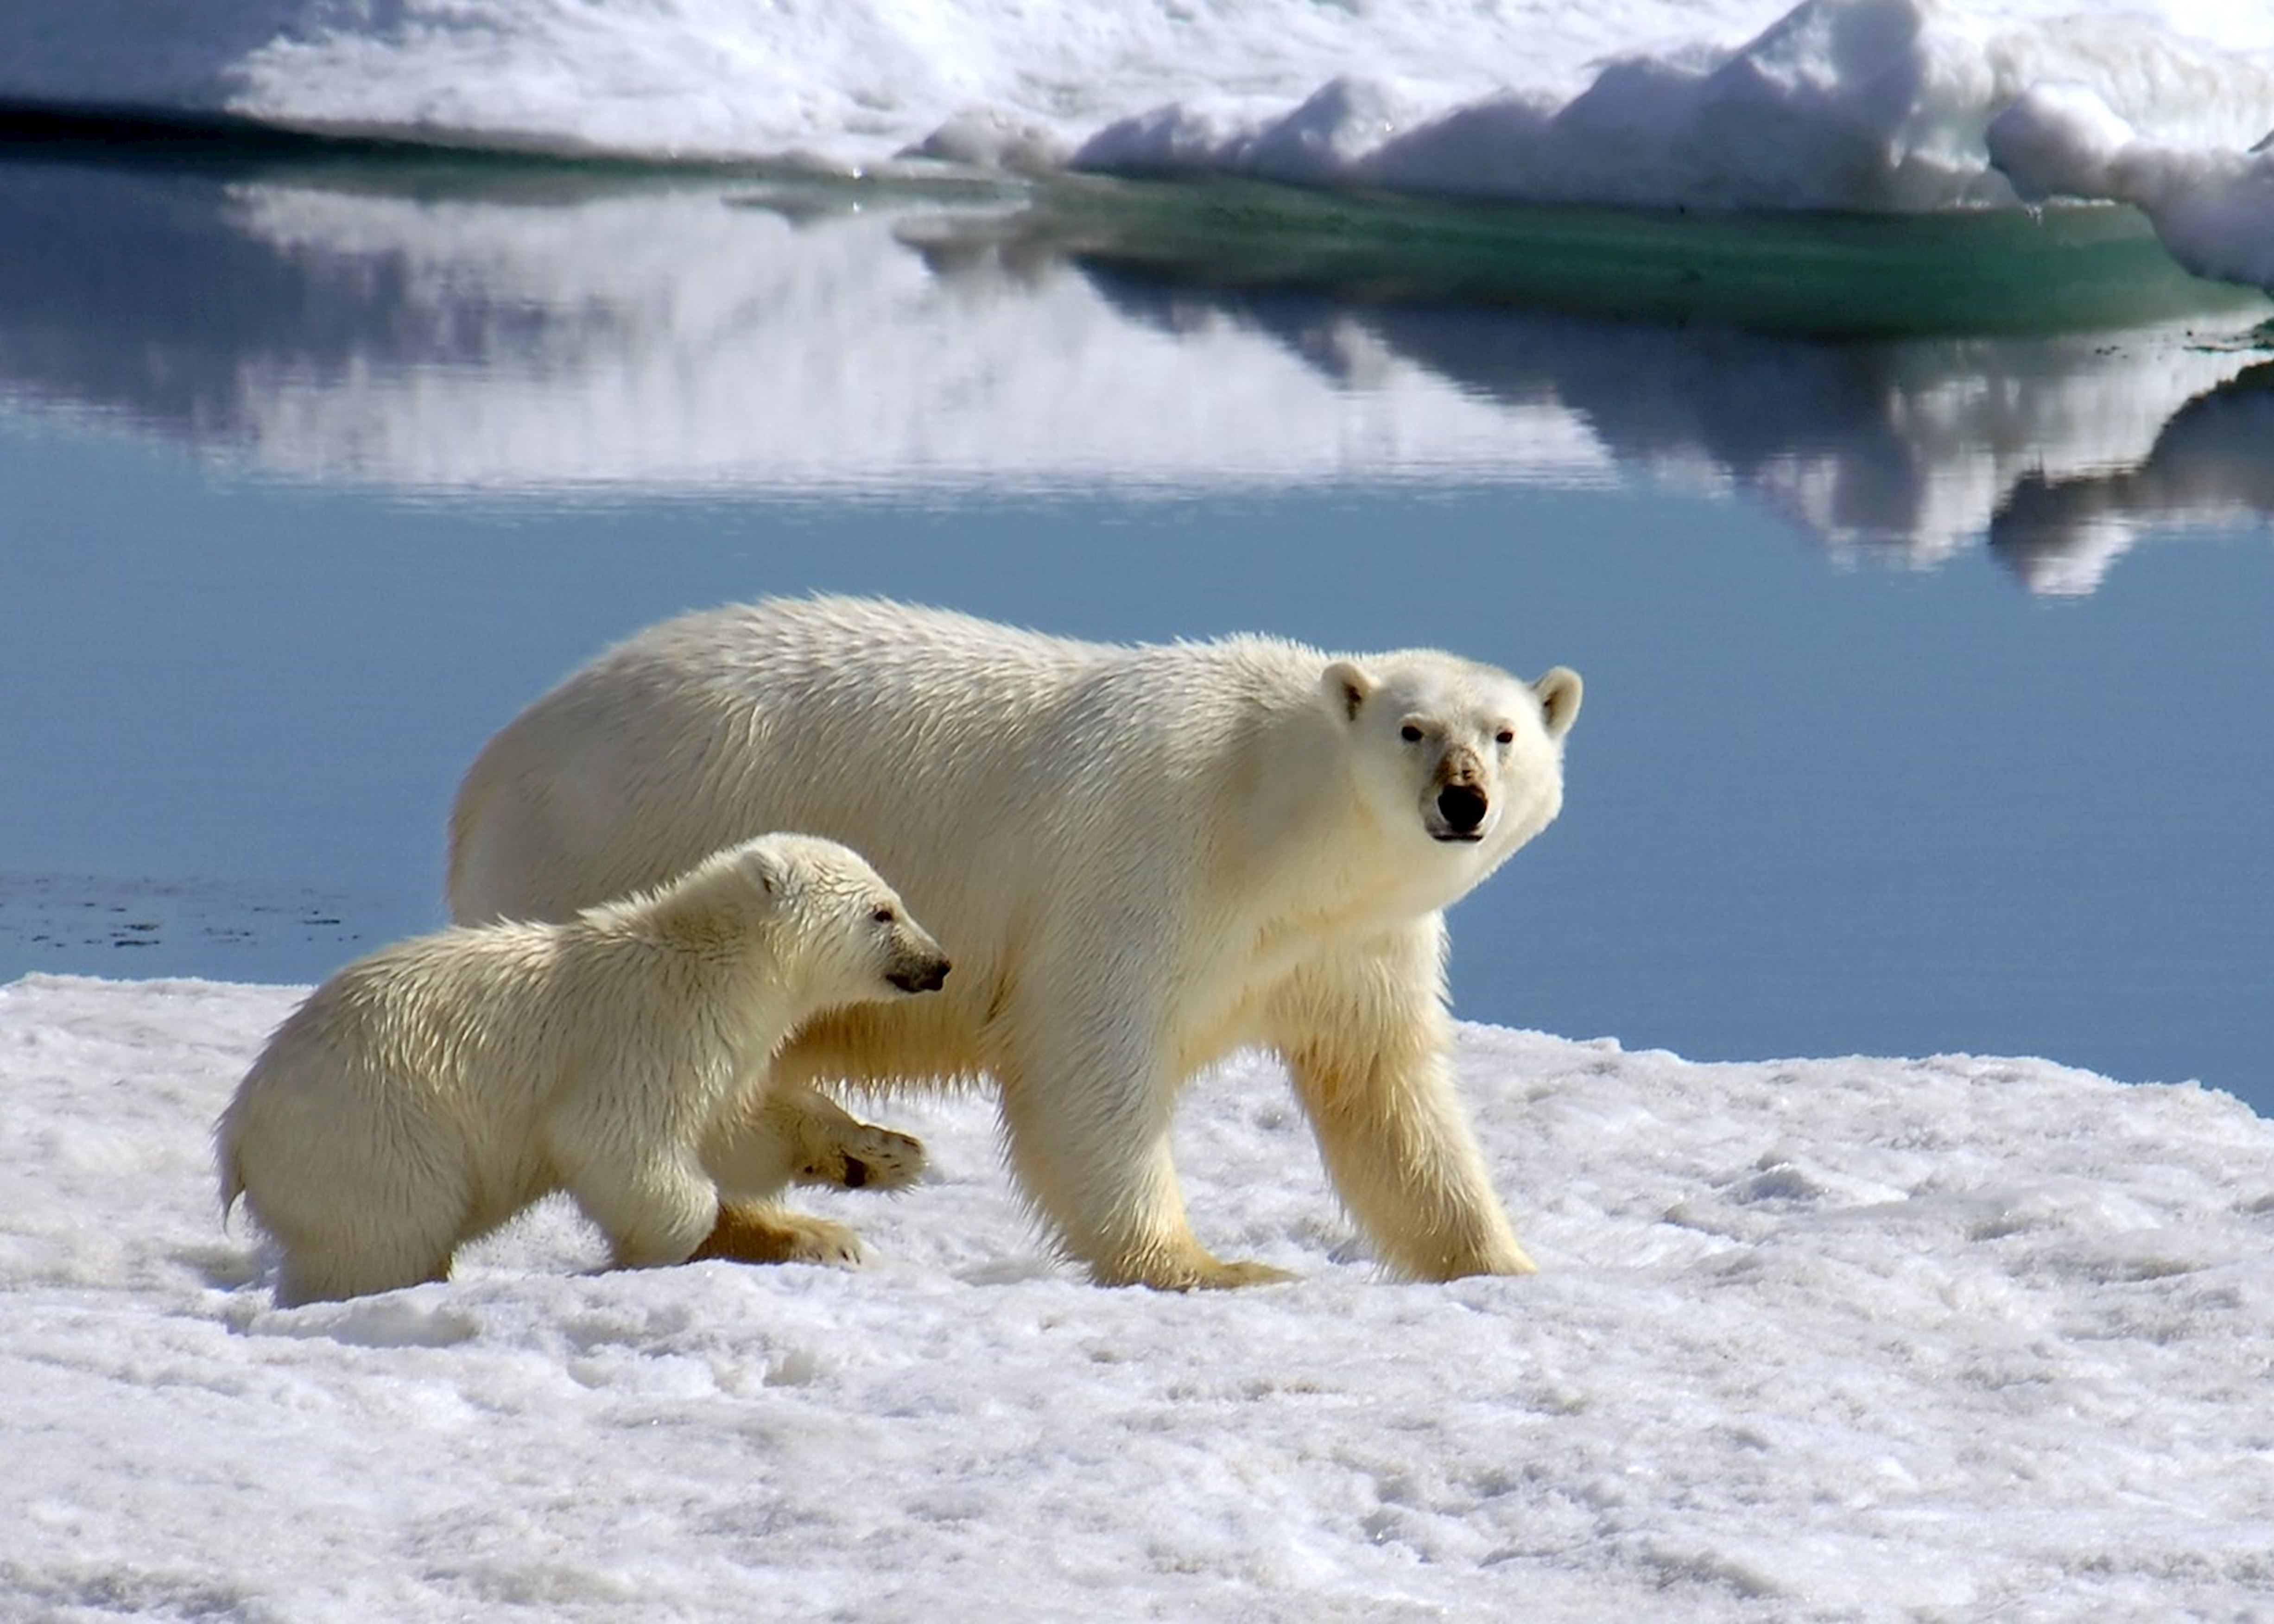 polar bears bear lifespan owls eat facts north arctic owl walrus regions earth diet captivity cruise spitsbergen noorderlicht left habitat